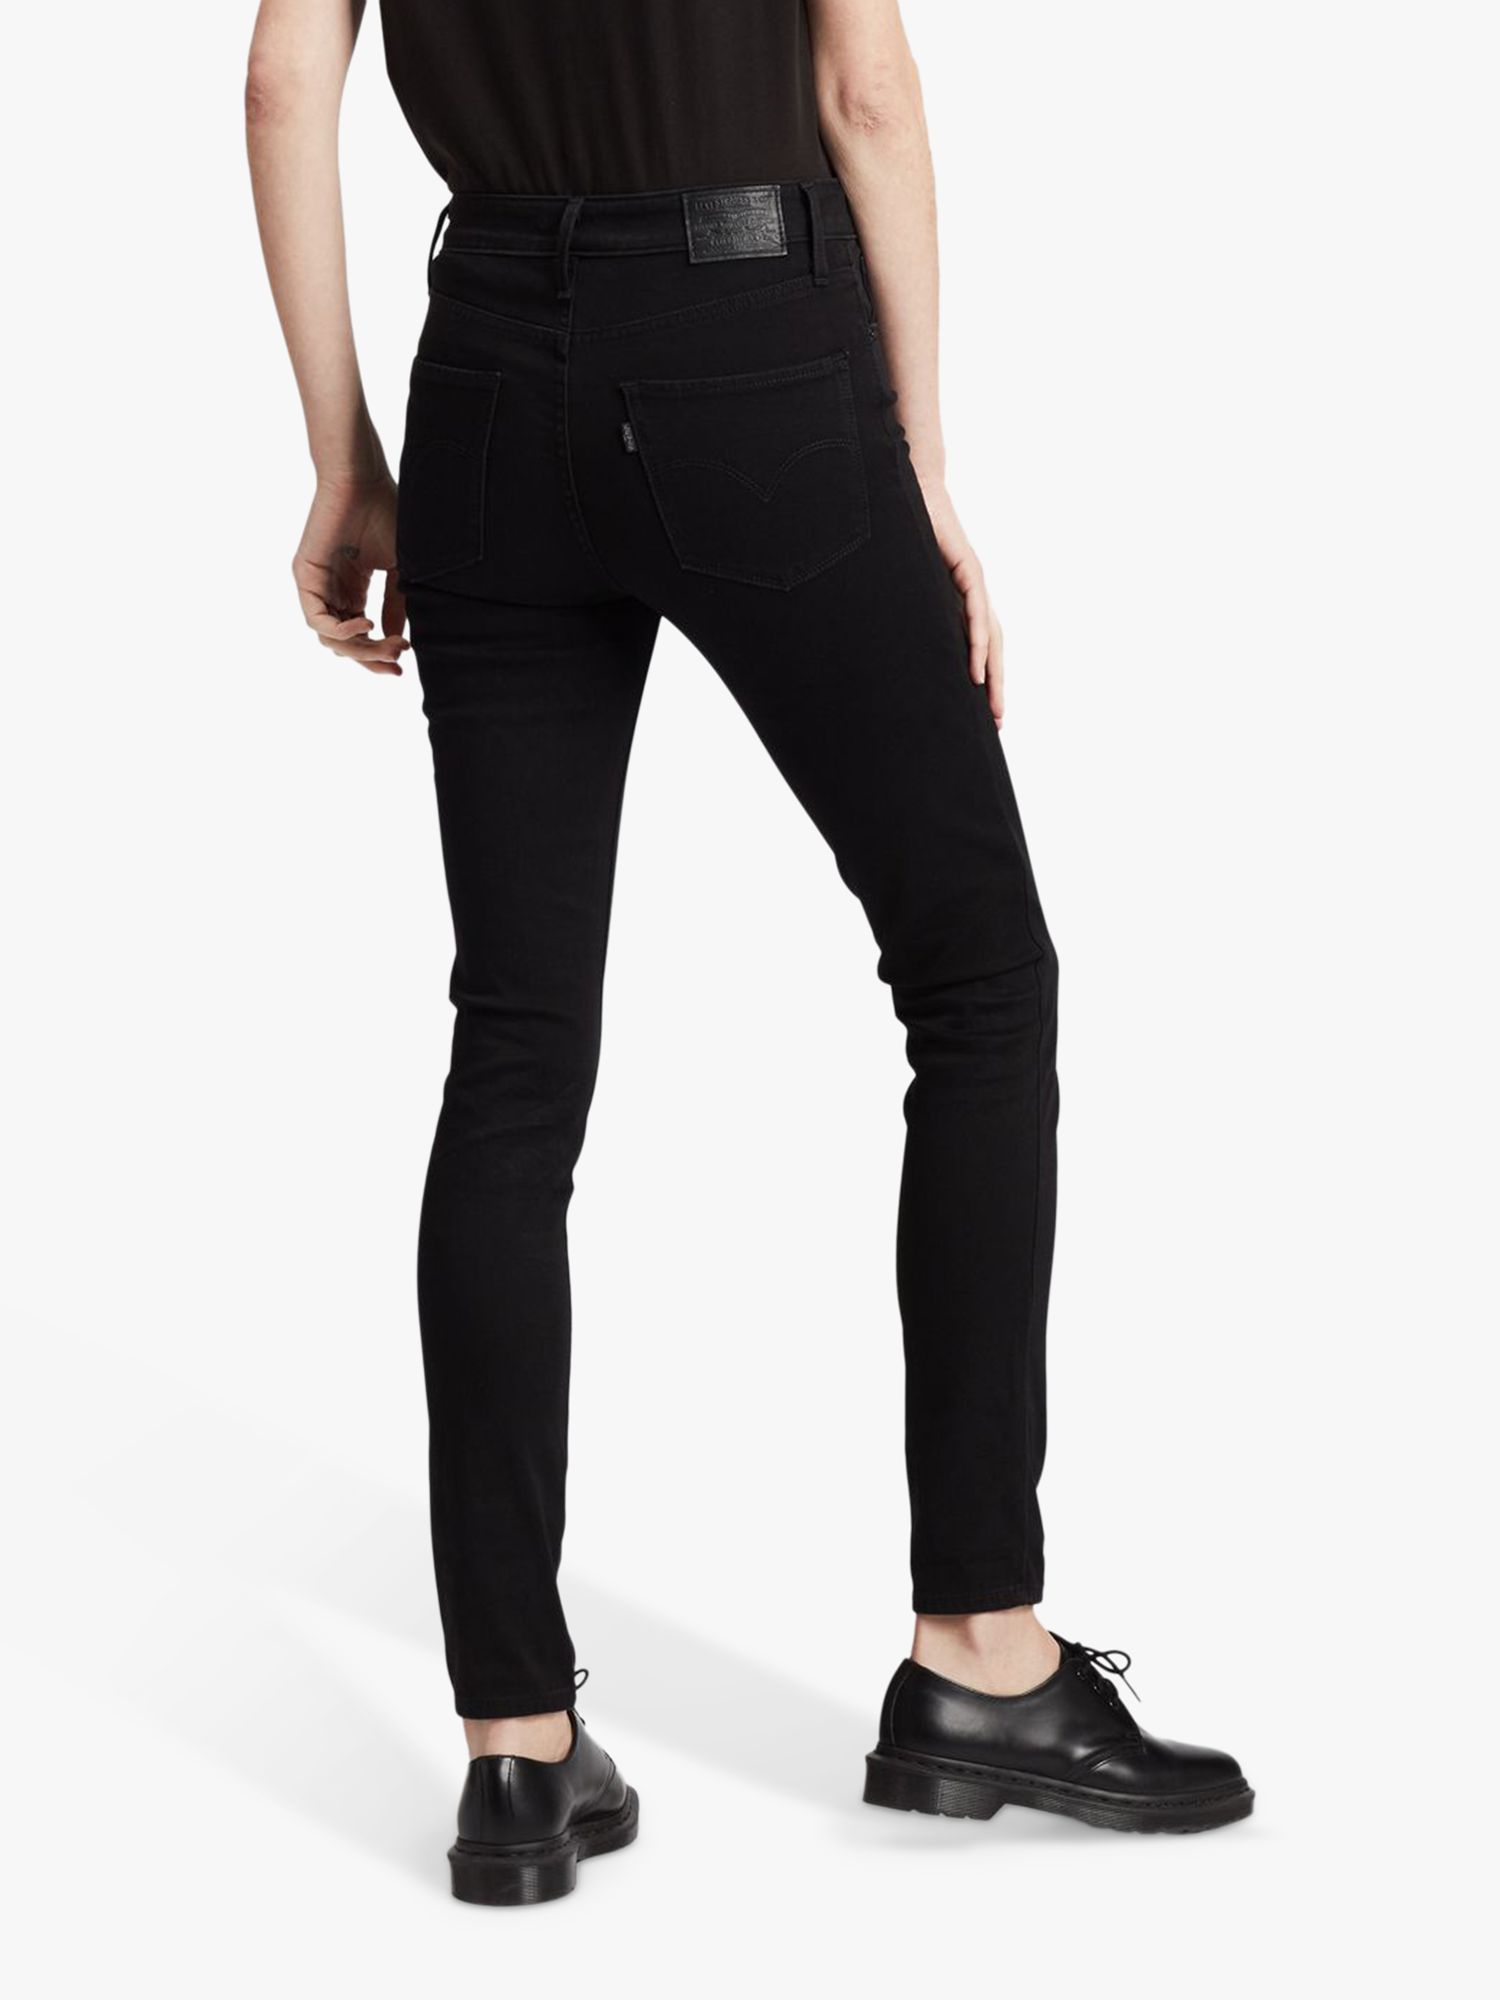 Levi's 721 High Rise Skinny Jeans, Long Shot Black, W24/L28